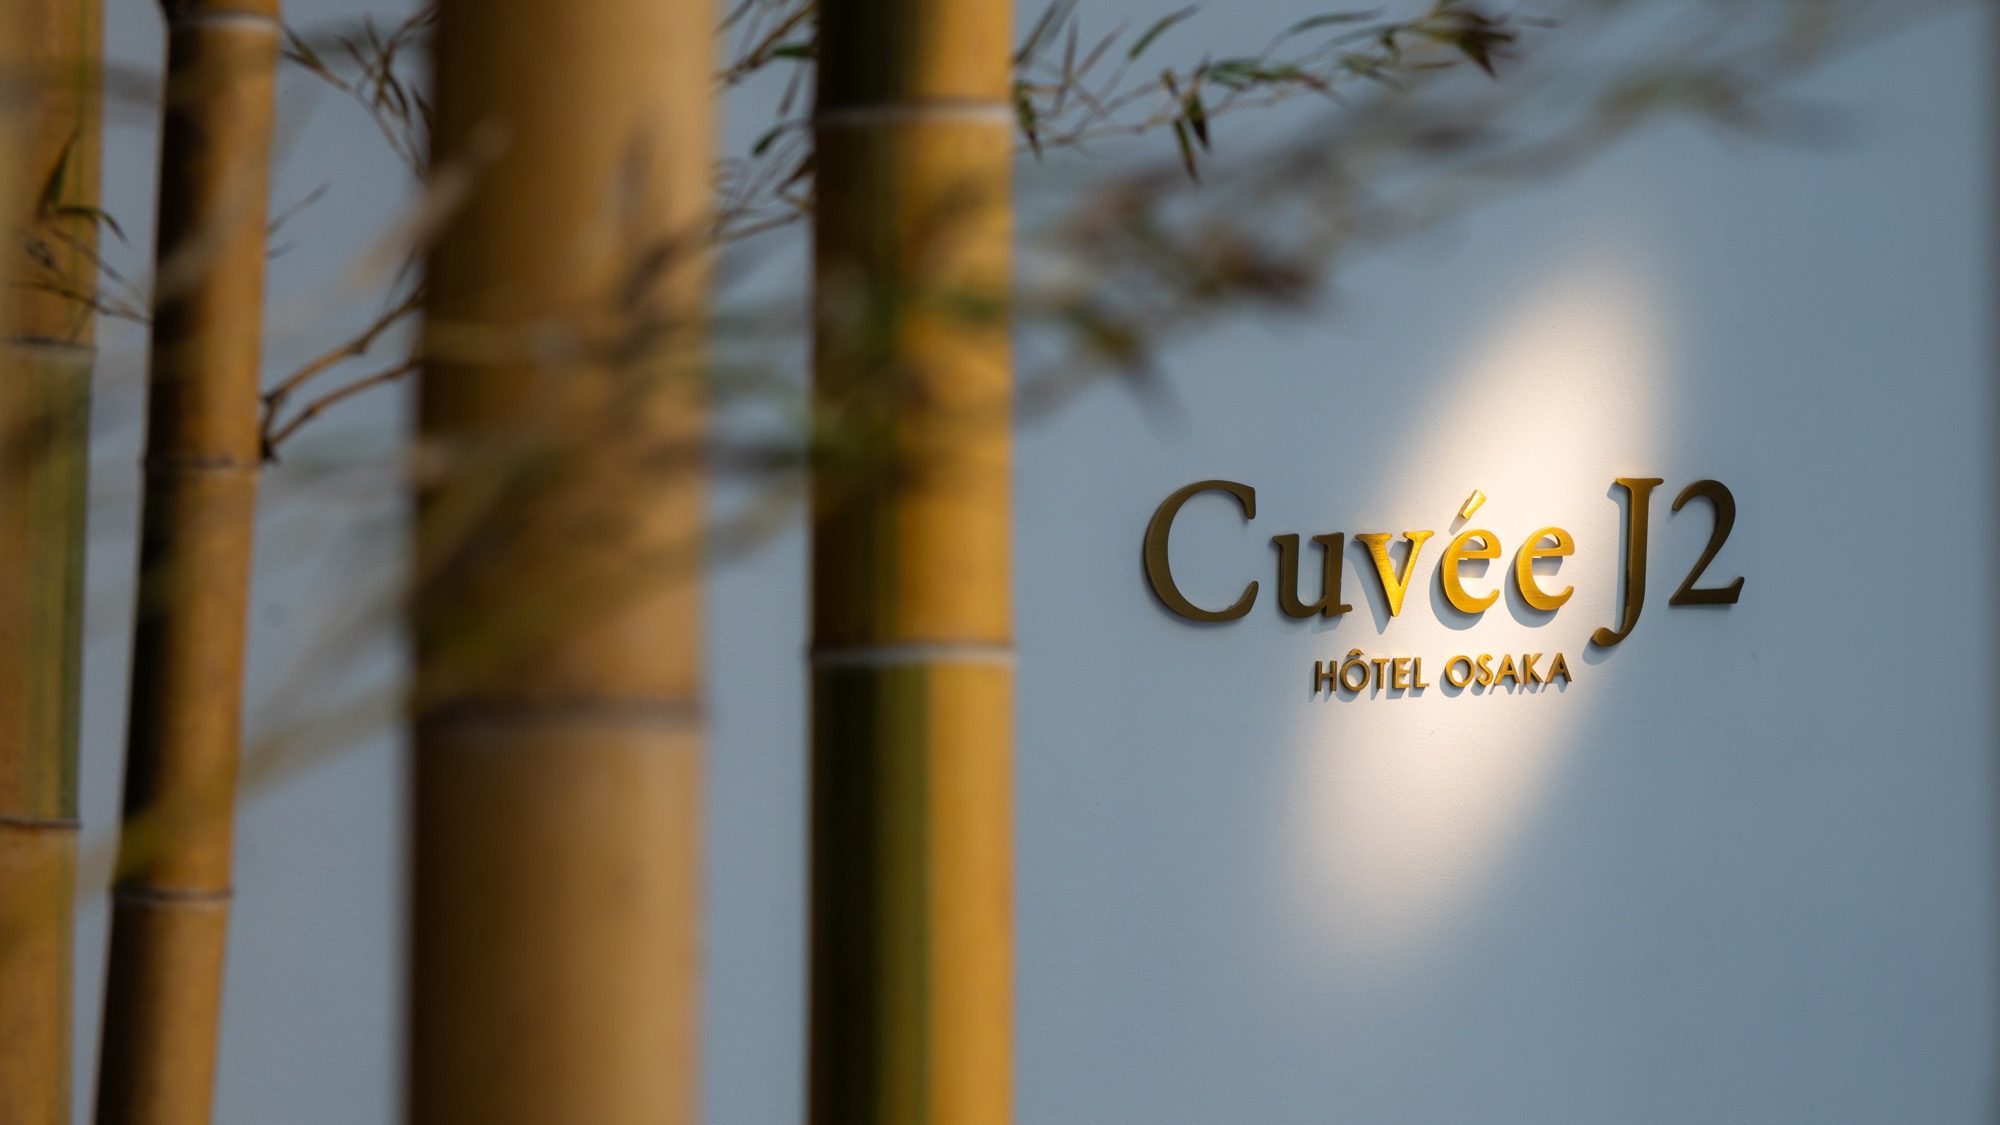 Cuvee J2 Hotel Osaka by温故知新